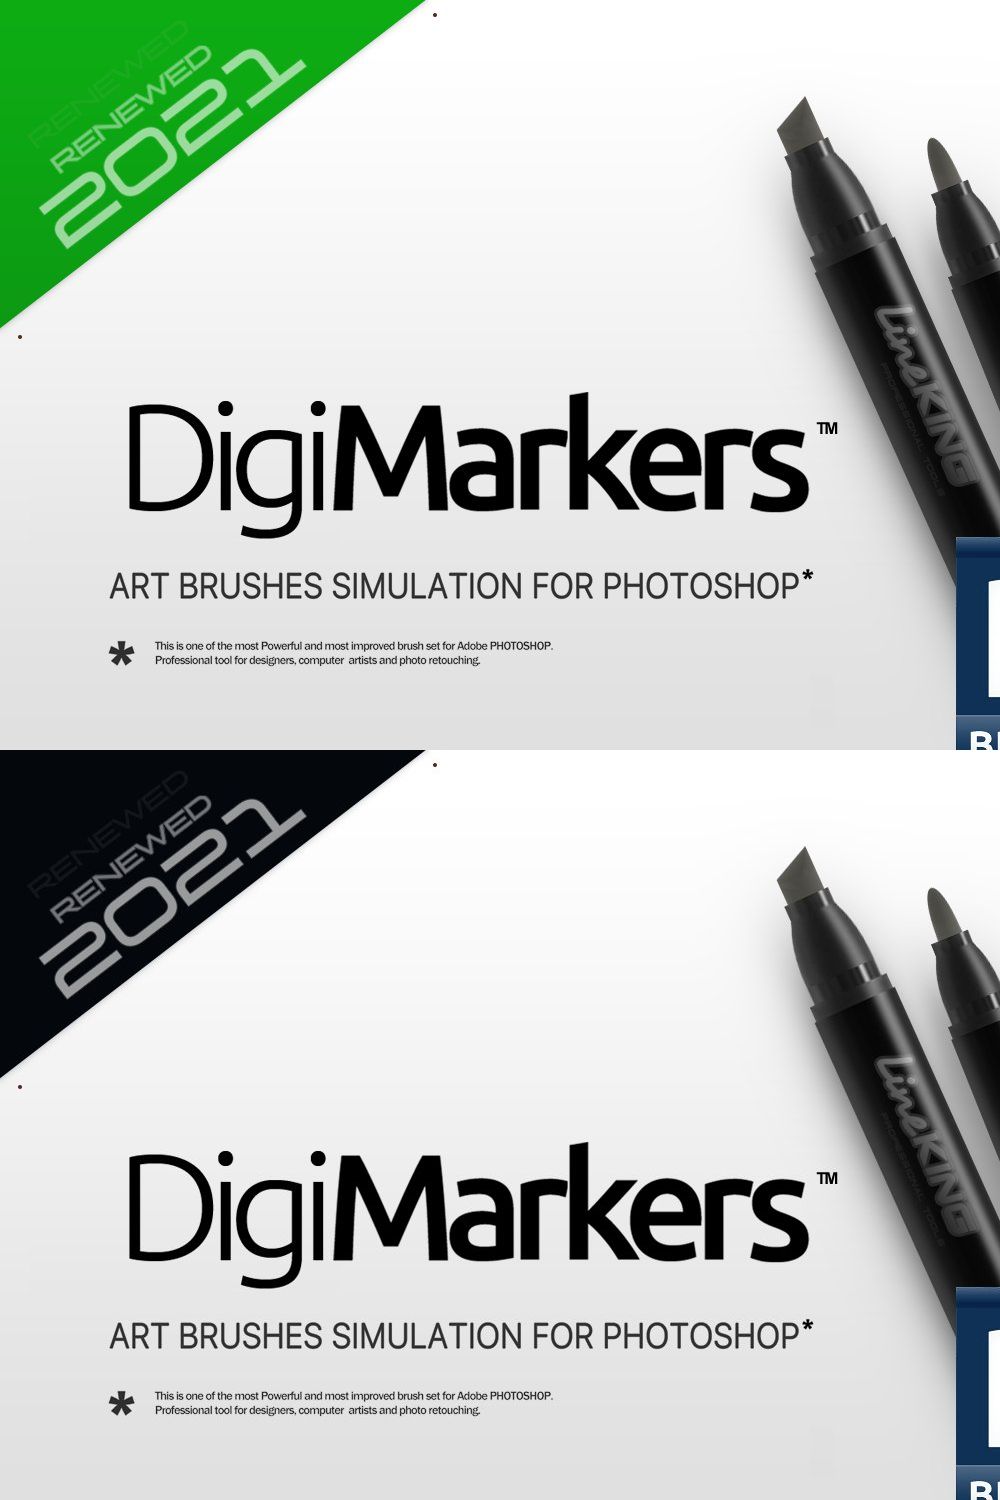 RM Digi Markers pinterest preview image.